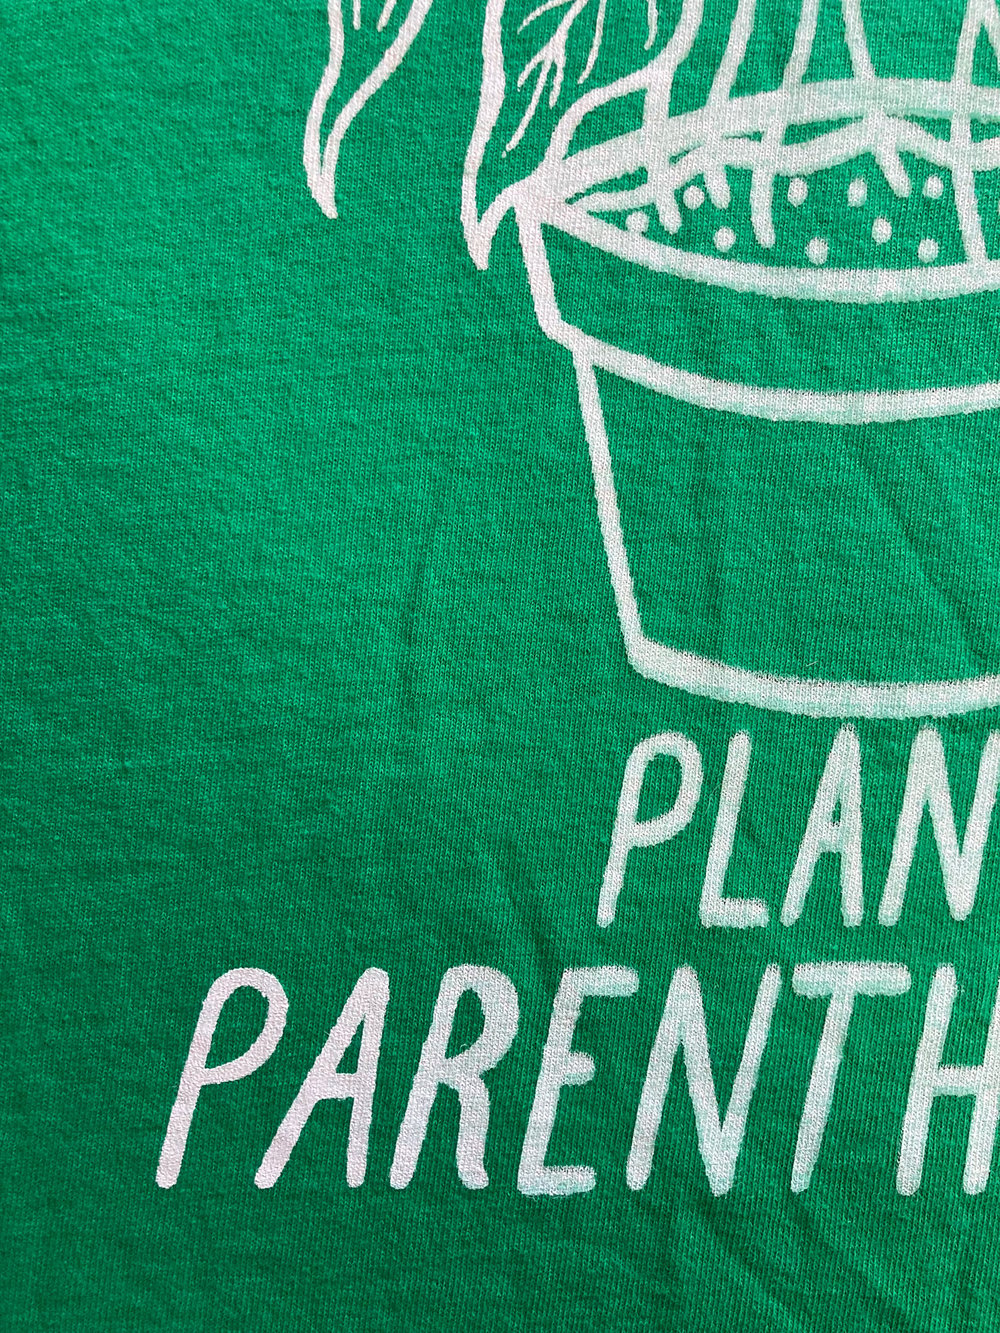 'Plant Parenthood' Custom Screenprint Tee (M Oneshot)